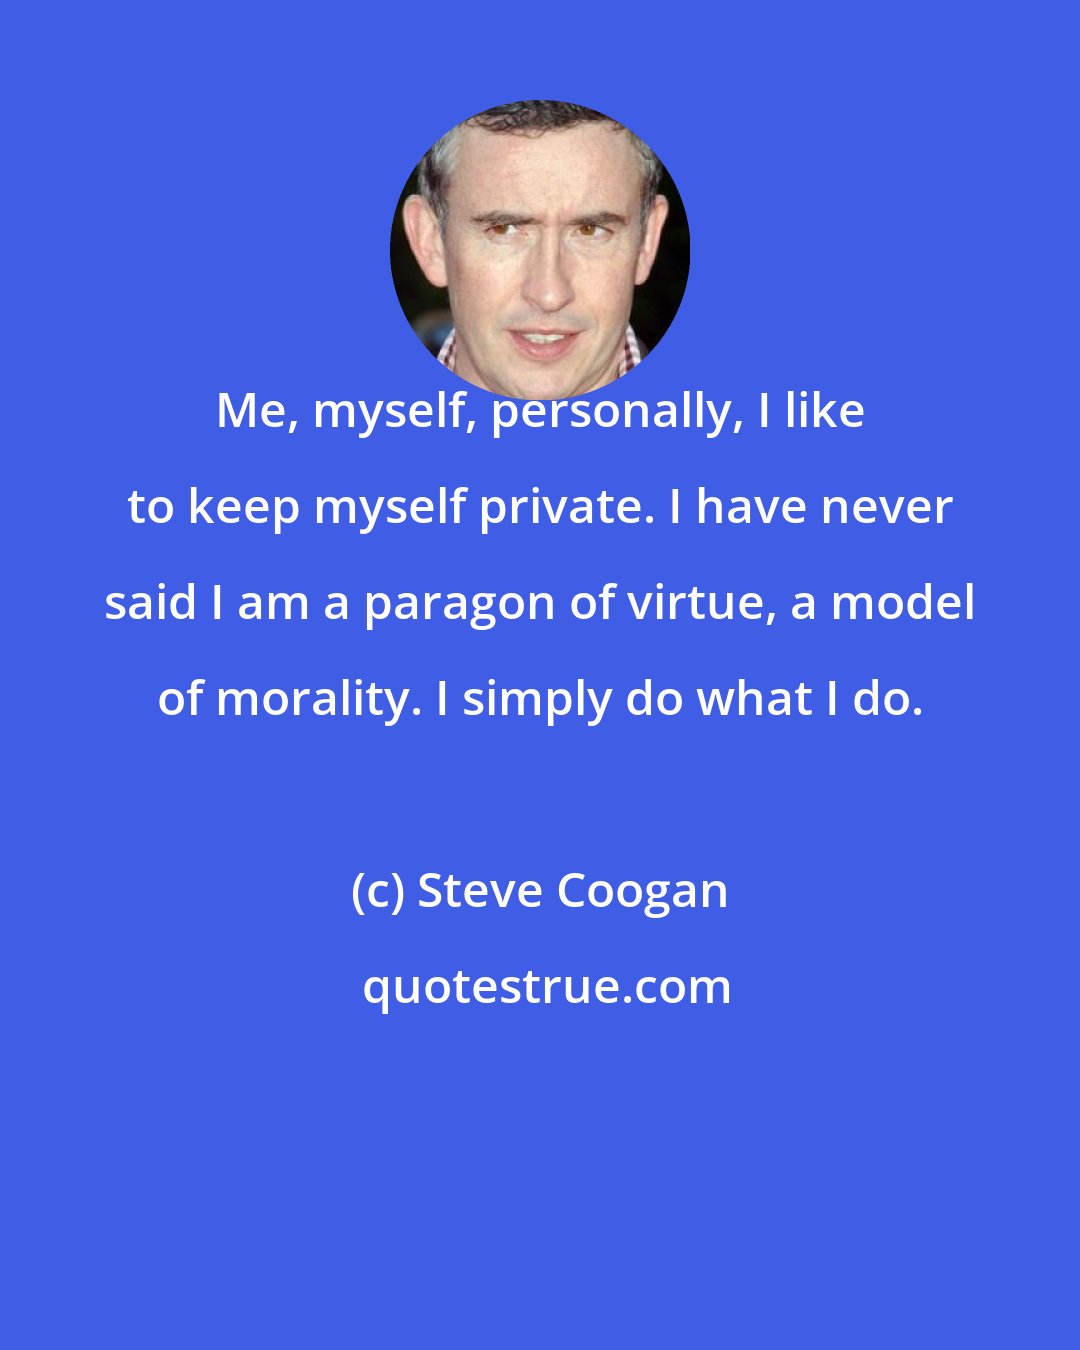 Steve Coogan: Me, myself, personally, I like to keep myself private. I have never said I am a paragon of virtue, a model of morality. I simply do what I do.